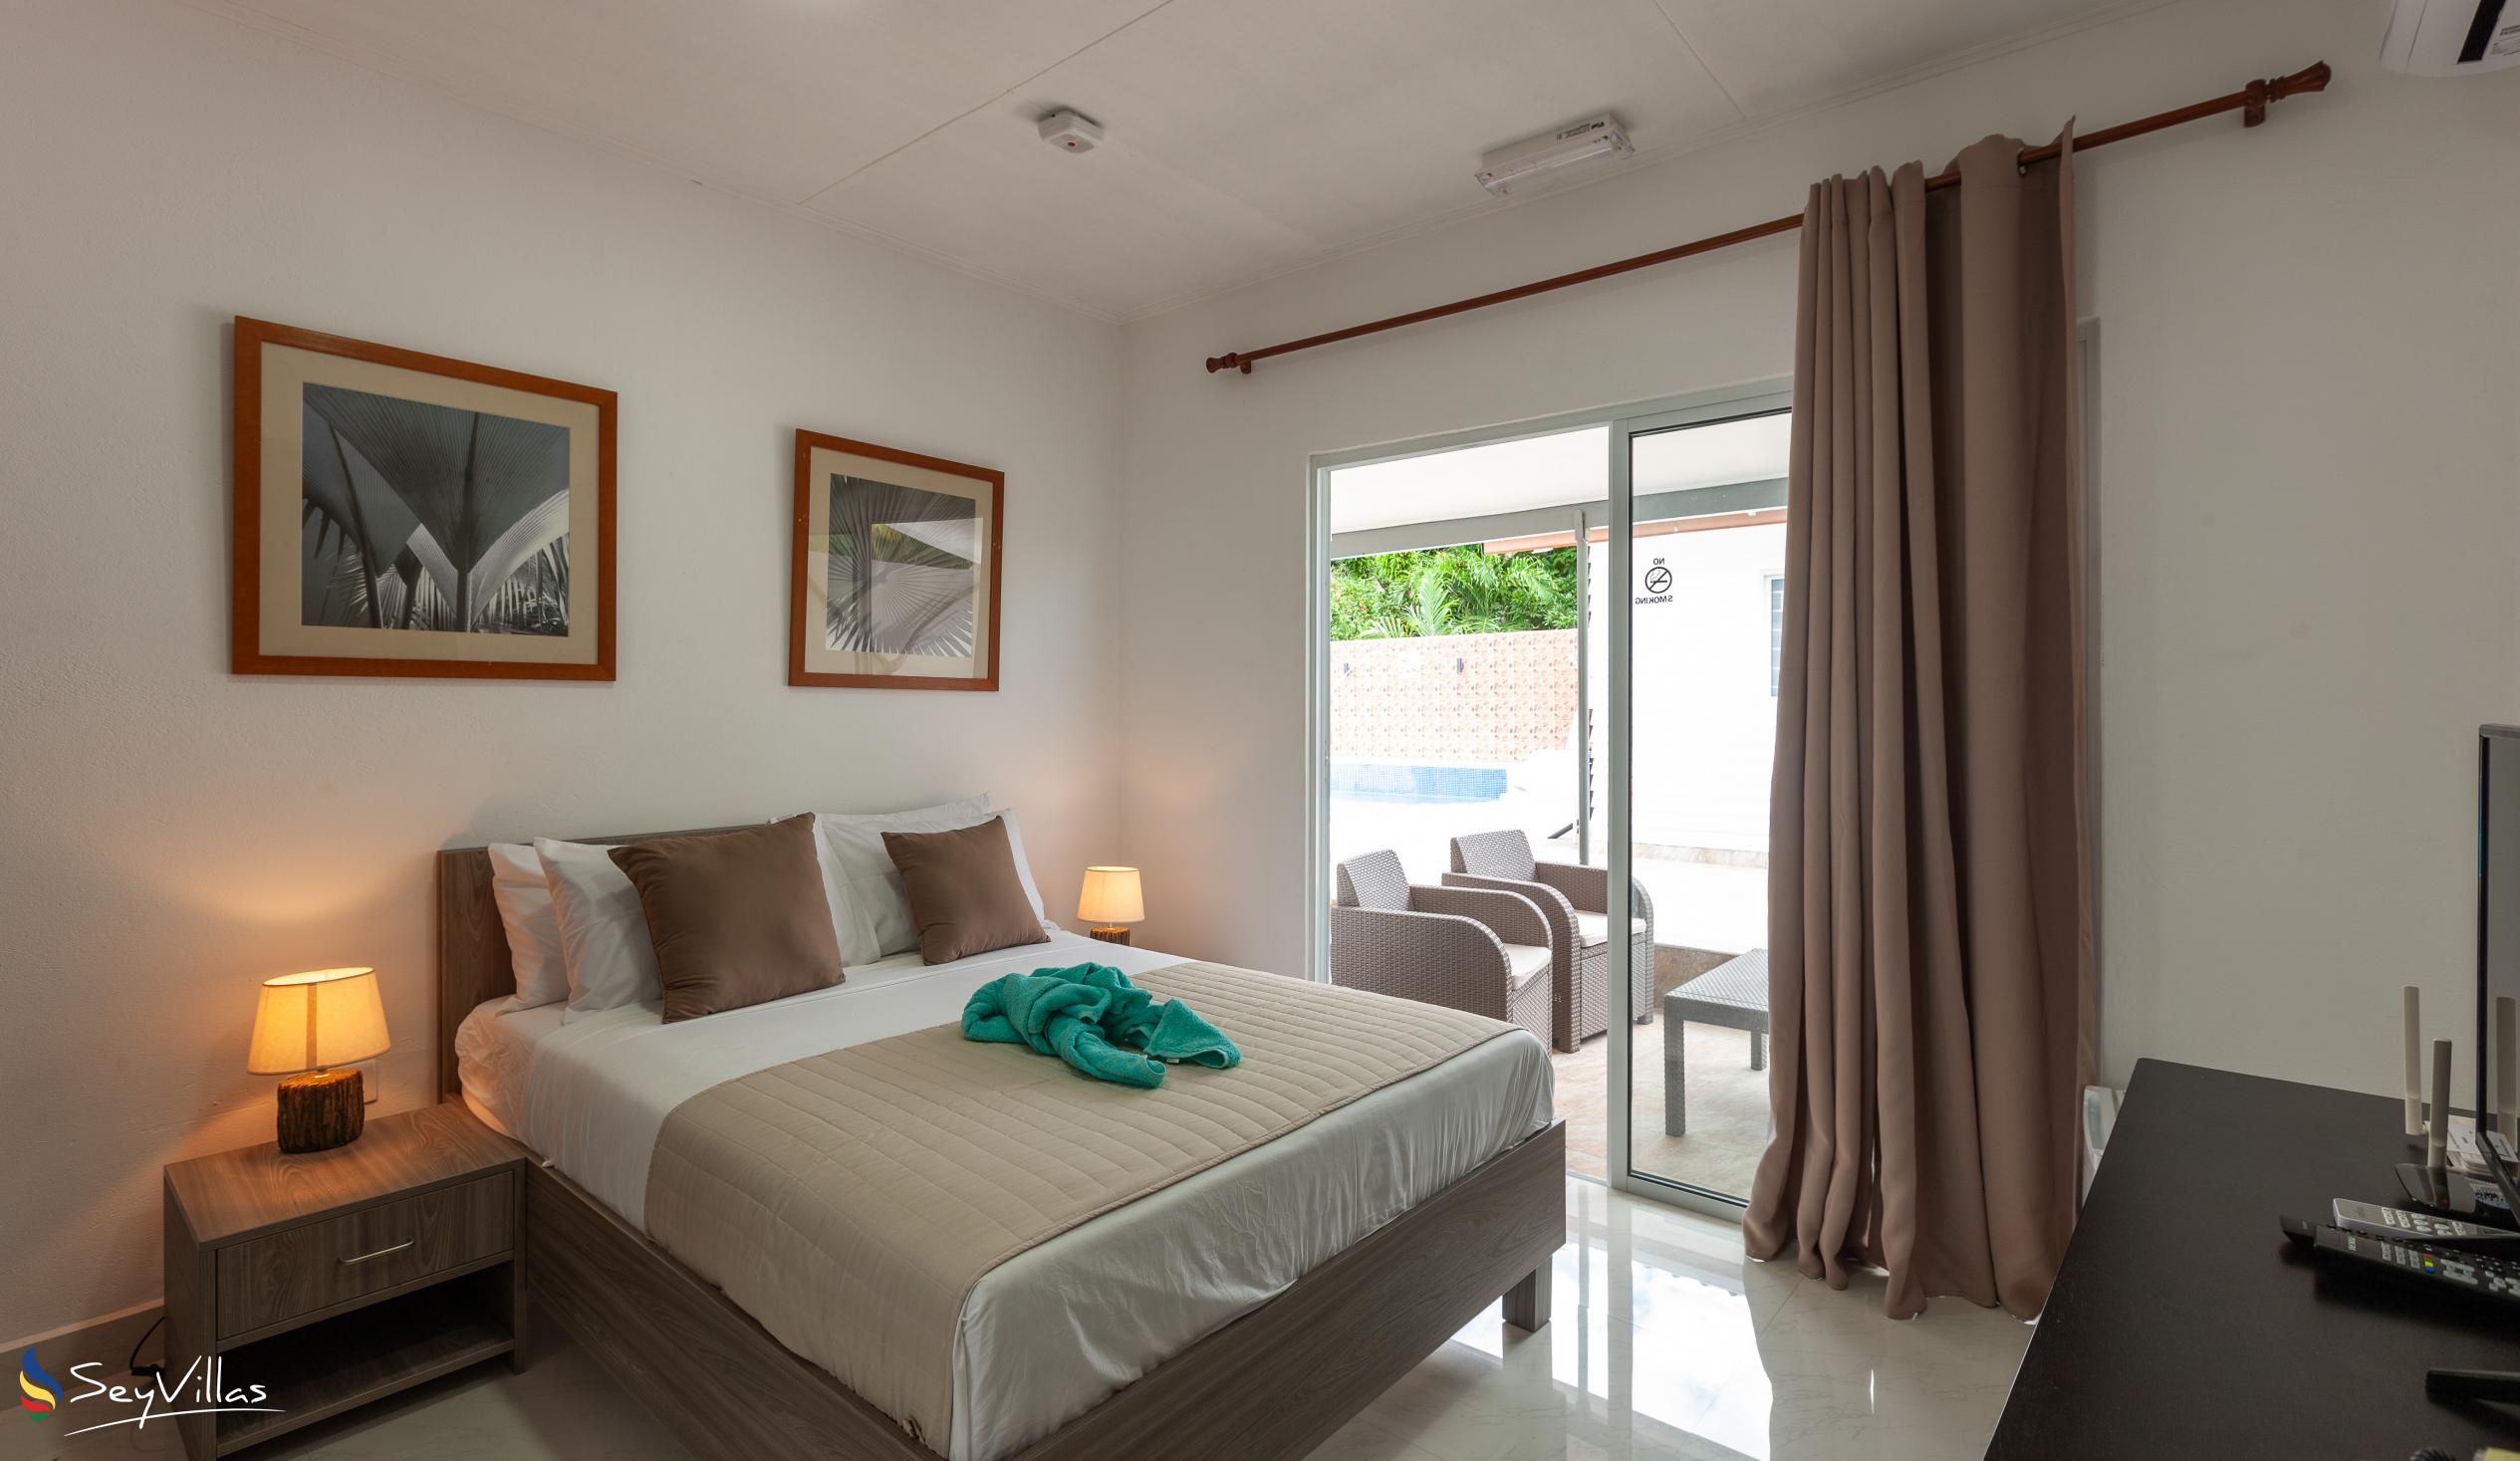 Foto 41: Hotel Plein Soleil - Chambre familiale - Praslin (Seychelles)